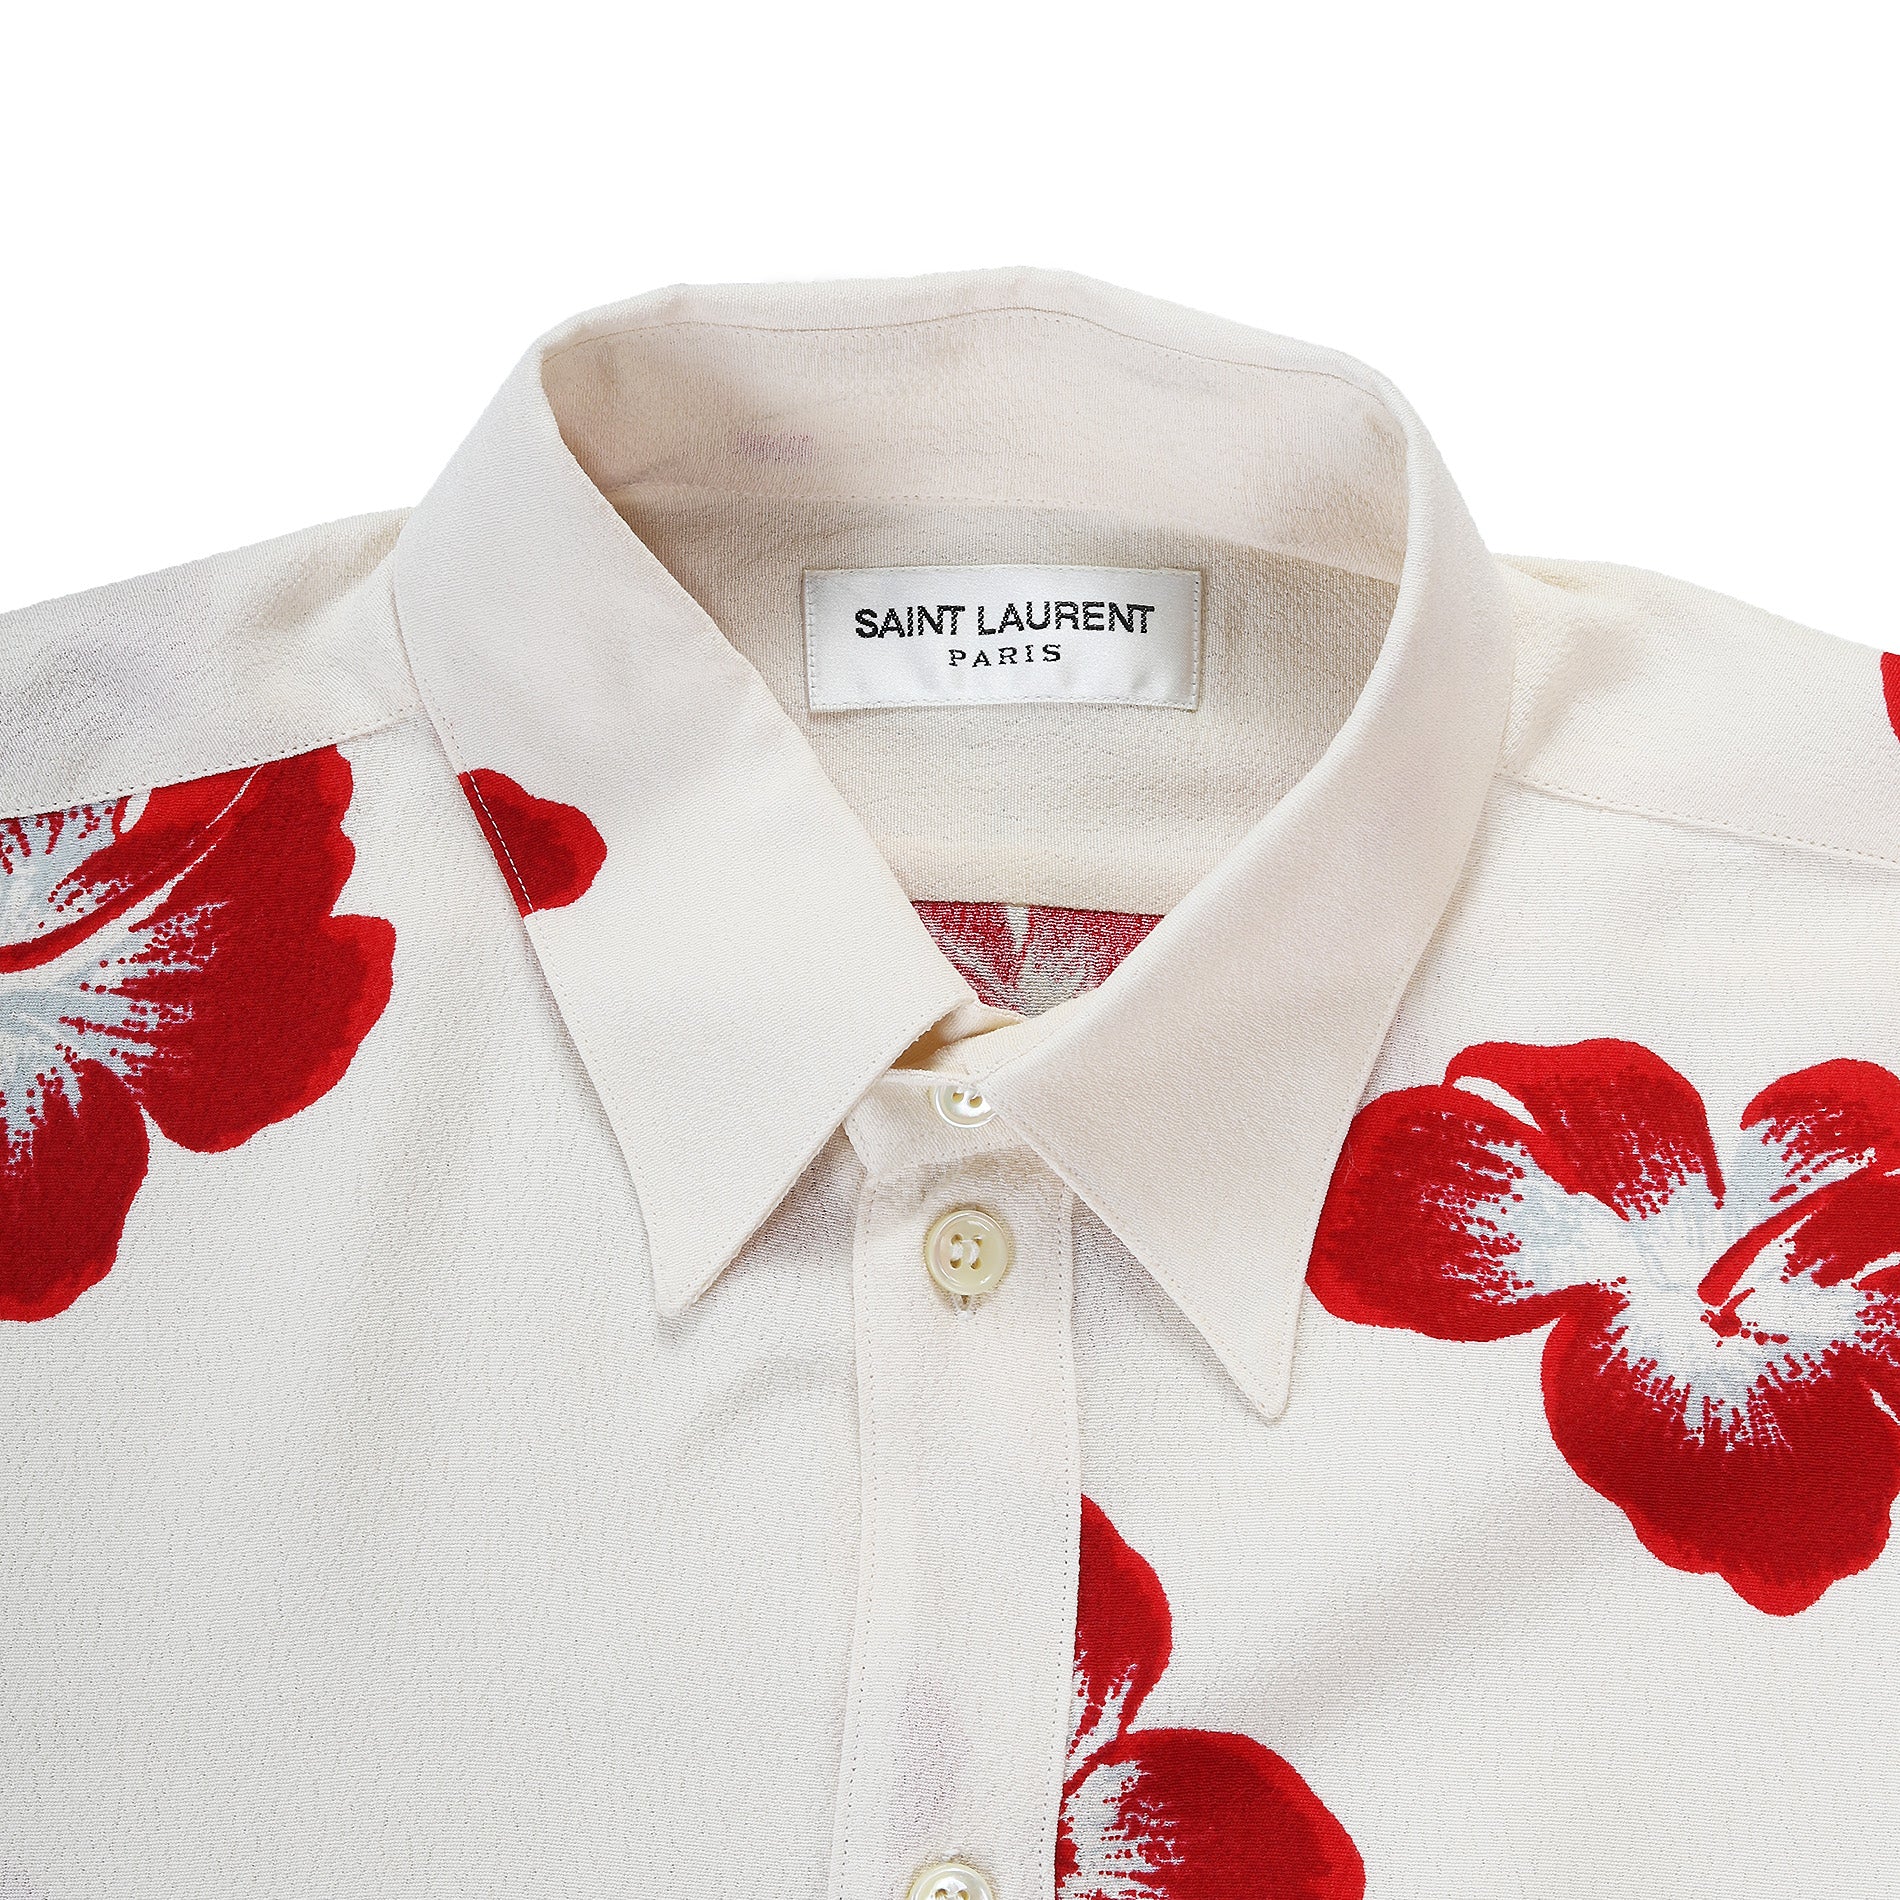 saint laurent hibiscus shirt